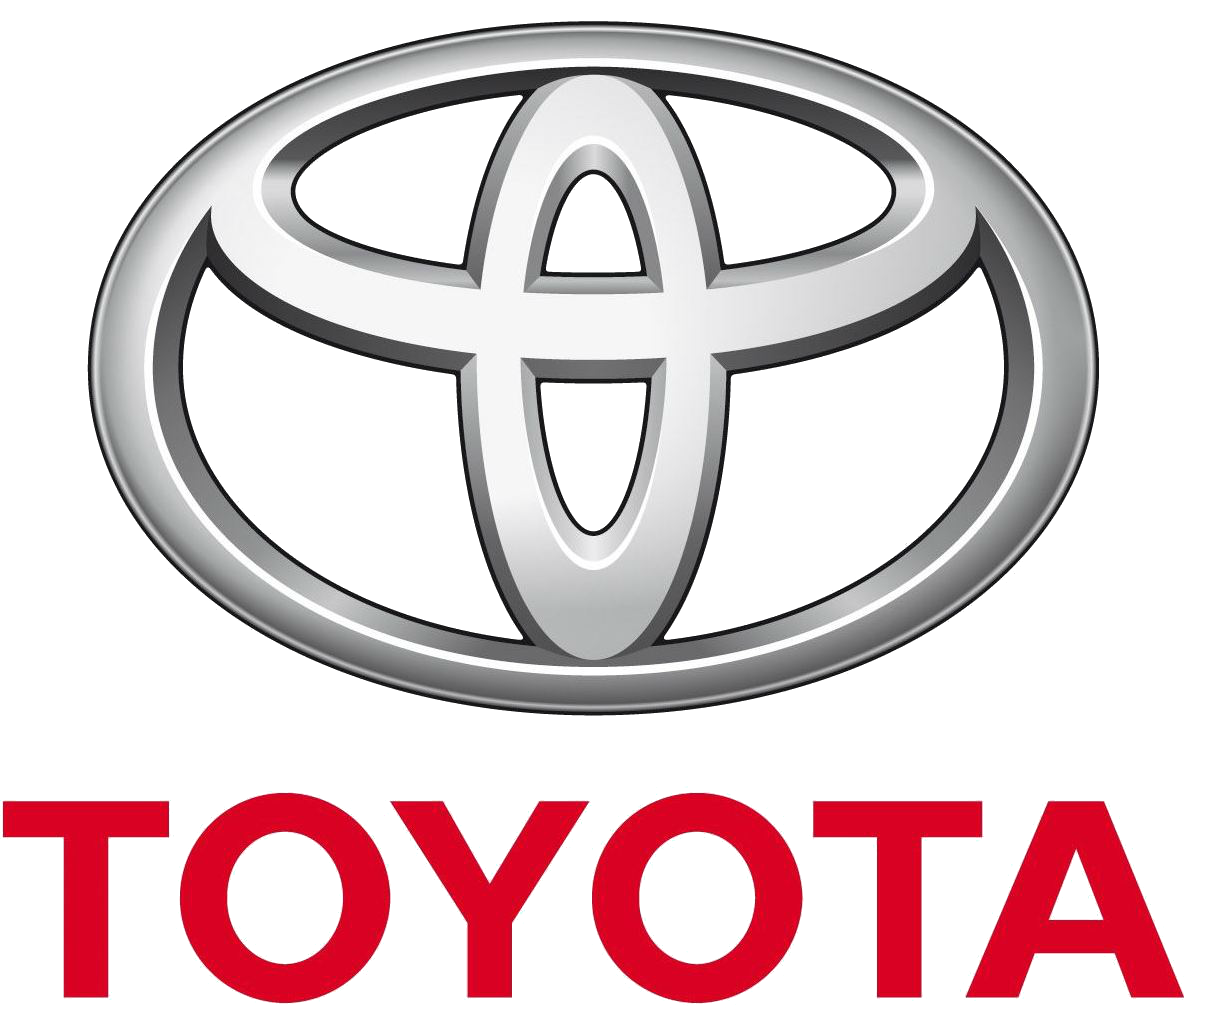 Toyota Logo, Toyota Car Symbol Meaning and History | Car Brand Names.com